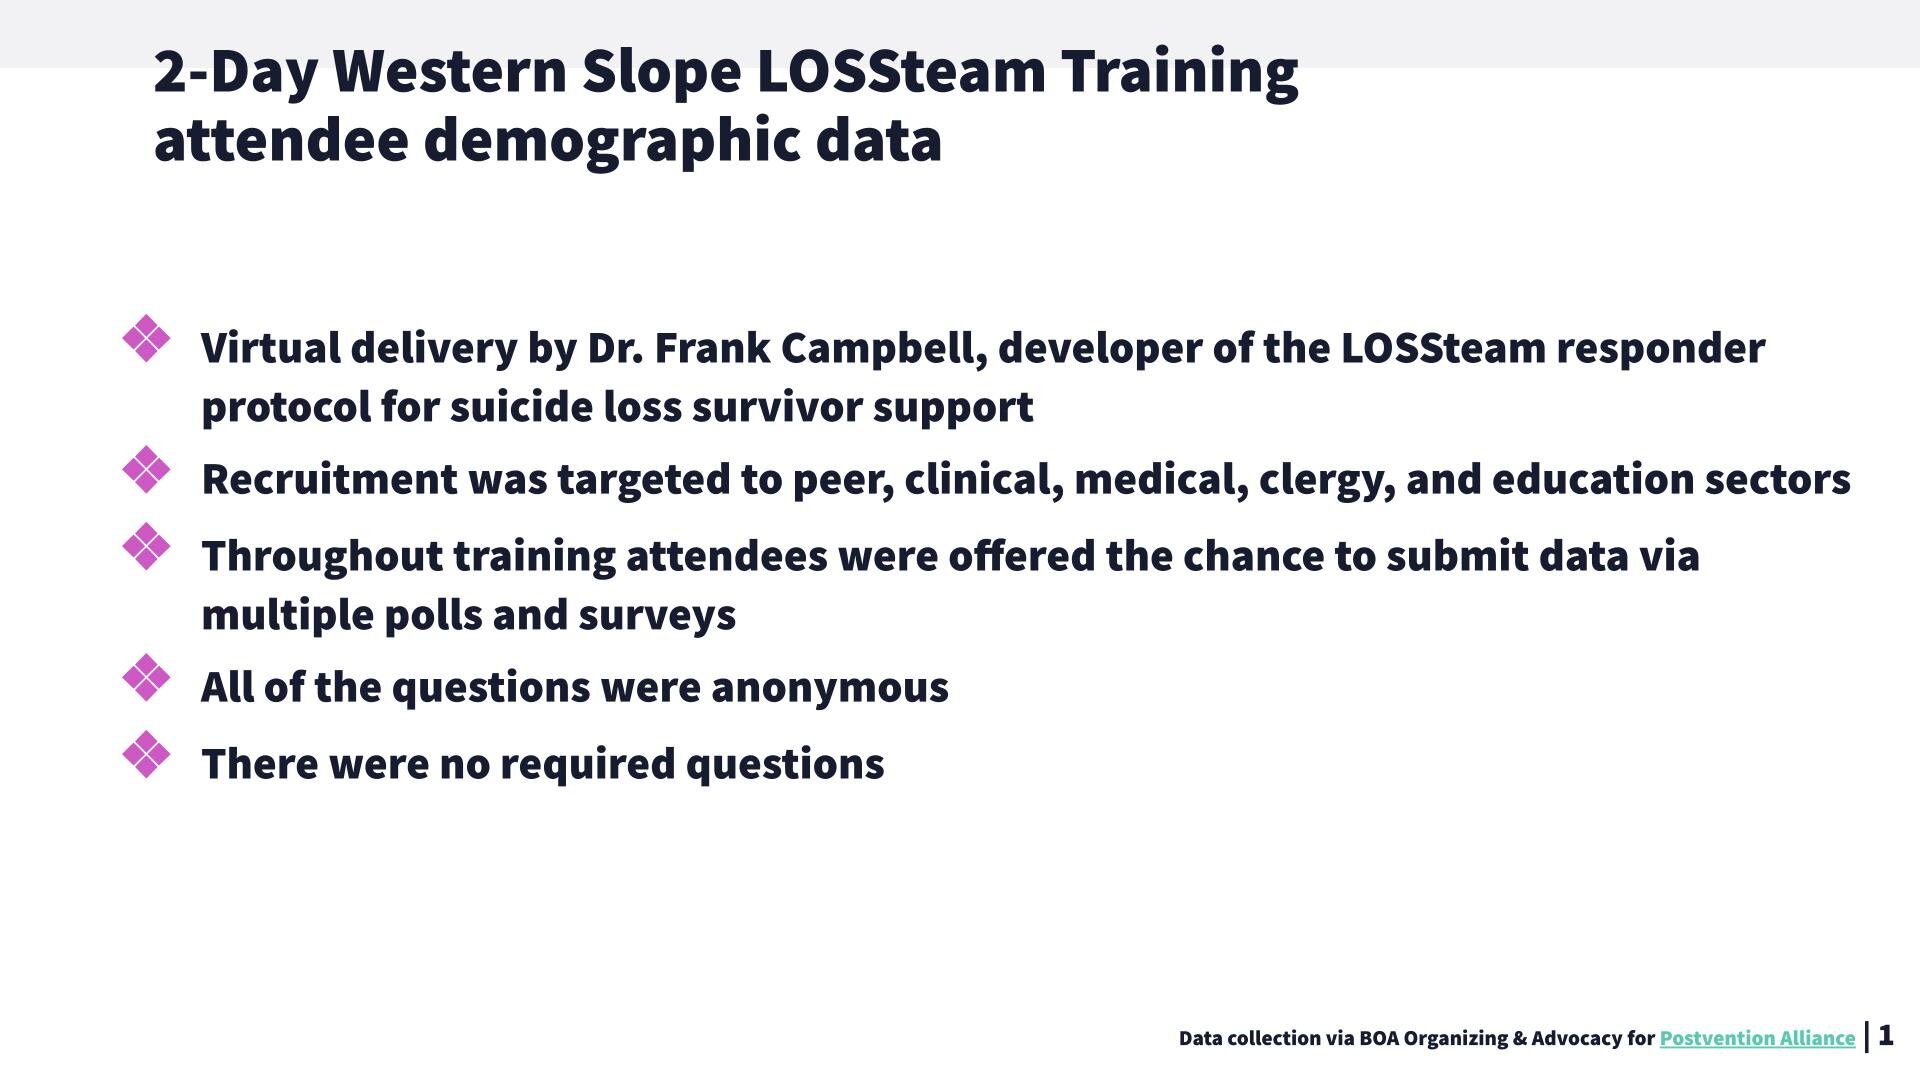 2021 Western Slope LOSSteam Training Data (1).jpg